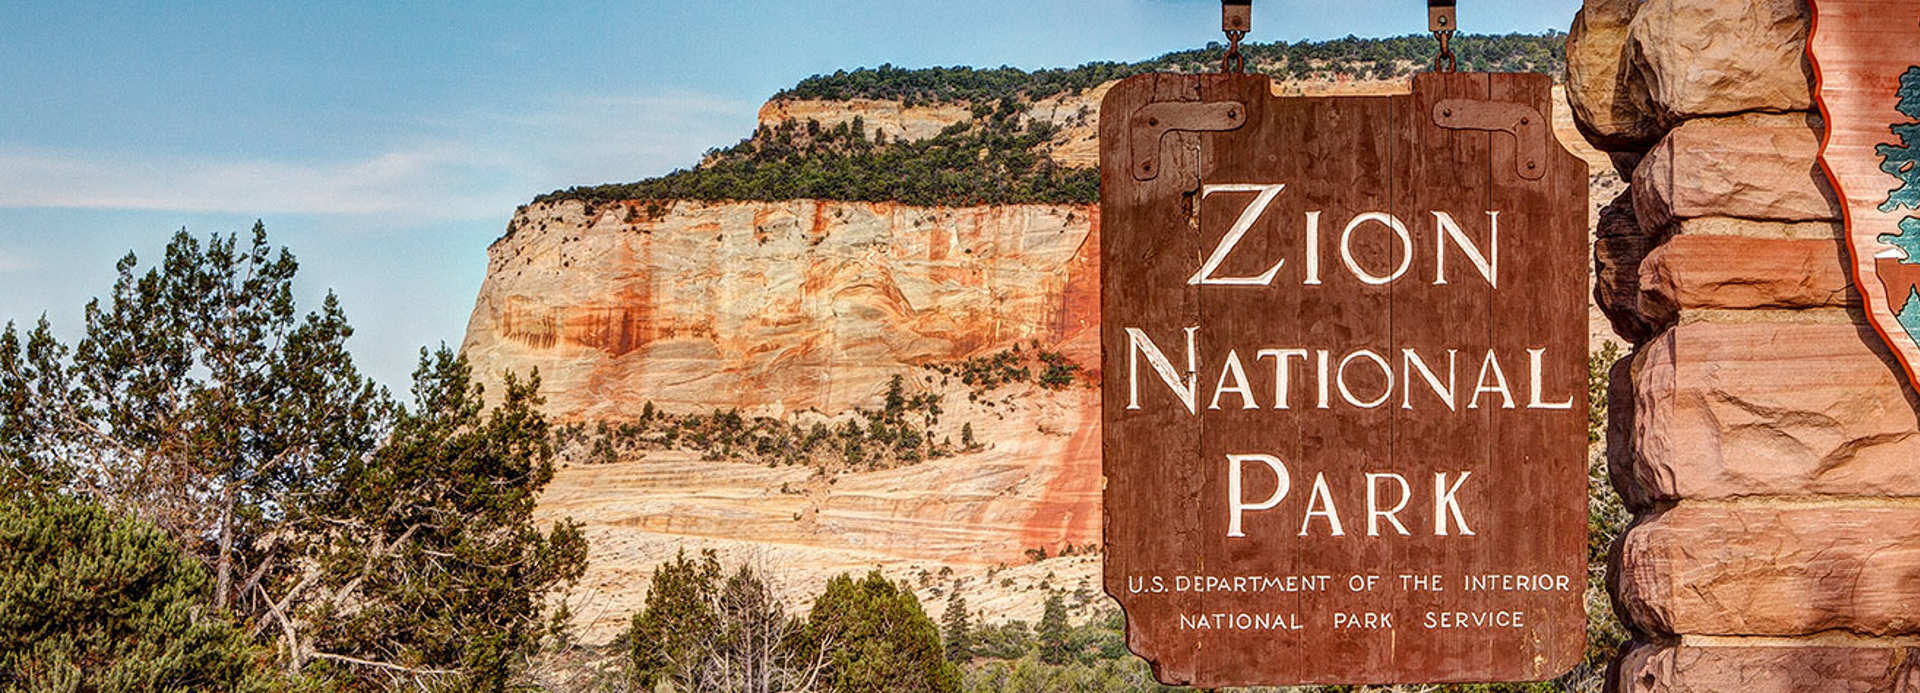 National Park Fees and Regulations | Utah.com